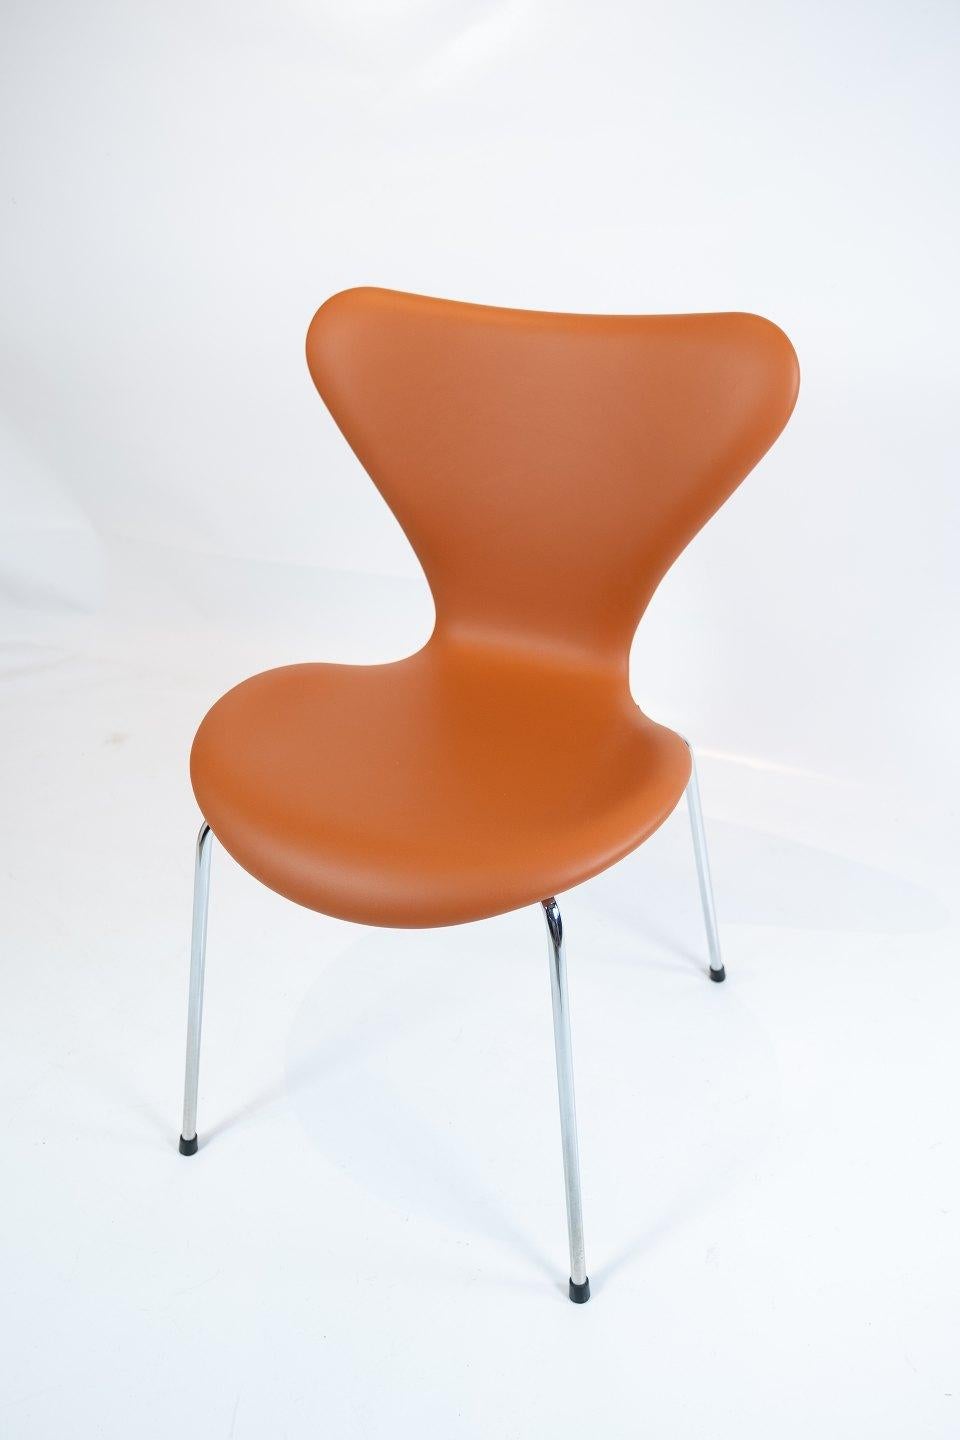 Danish Set of 6 Seven Chairs, Model 3107, Designed by Arne Jacobsen